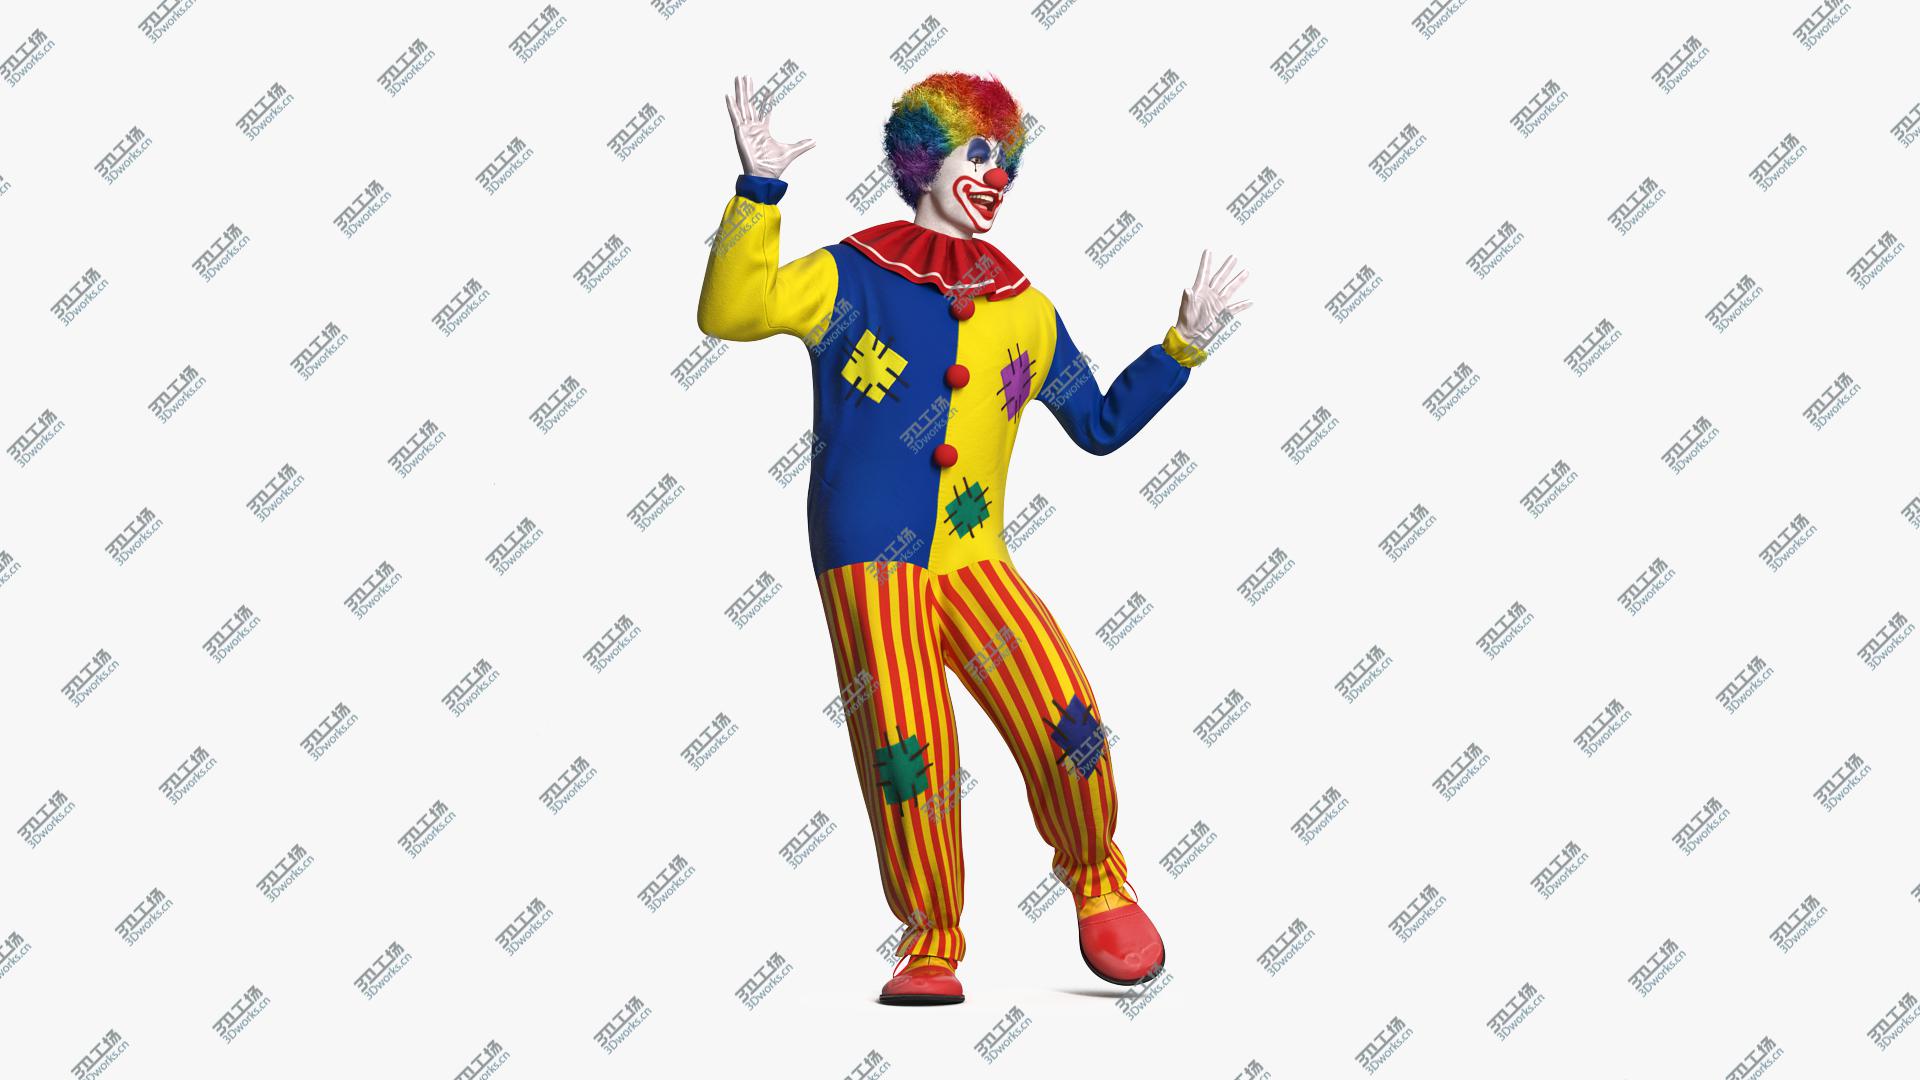 images/goods_img/202104093/Adult Clown Suit Dancing Pose Fur model/1.jpg